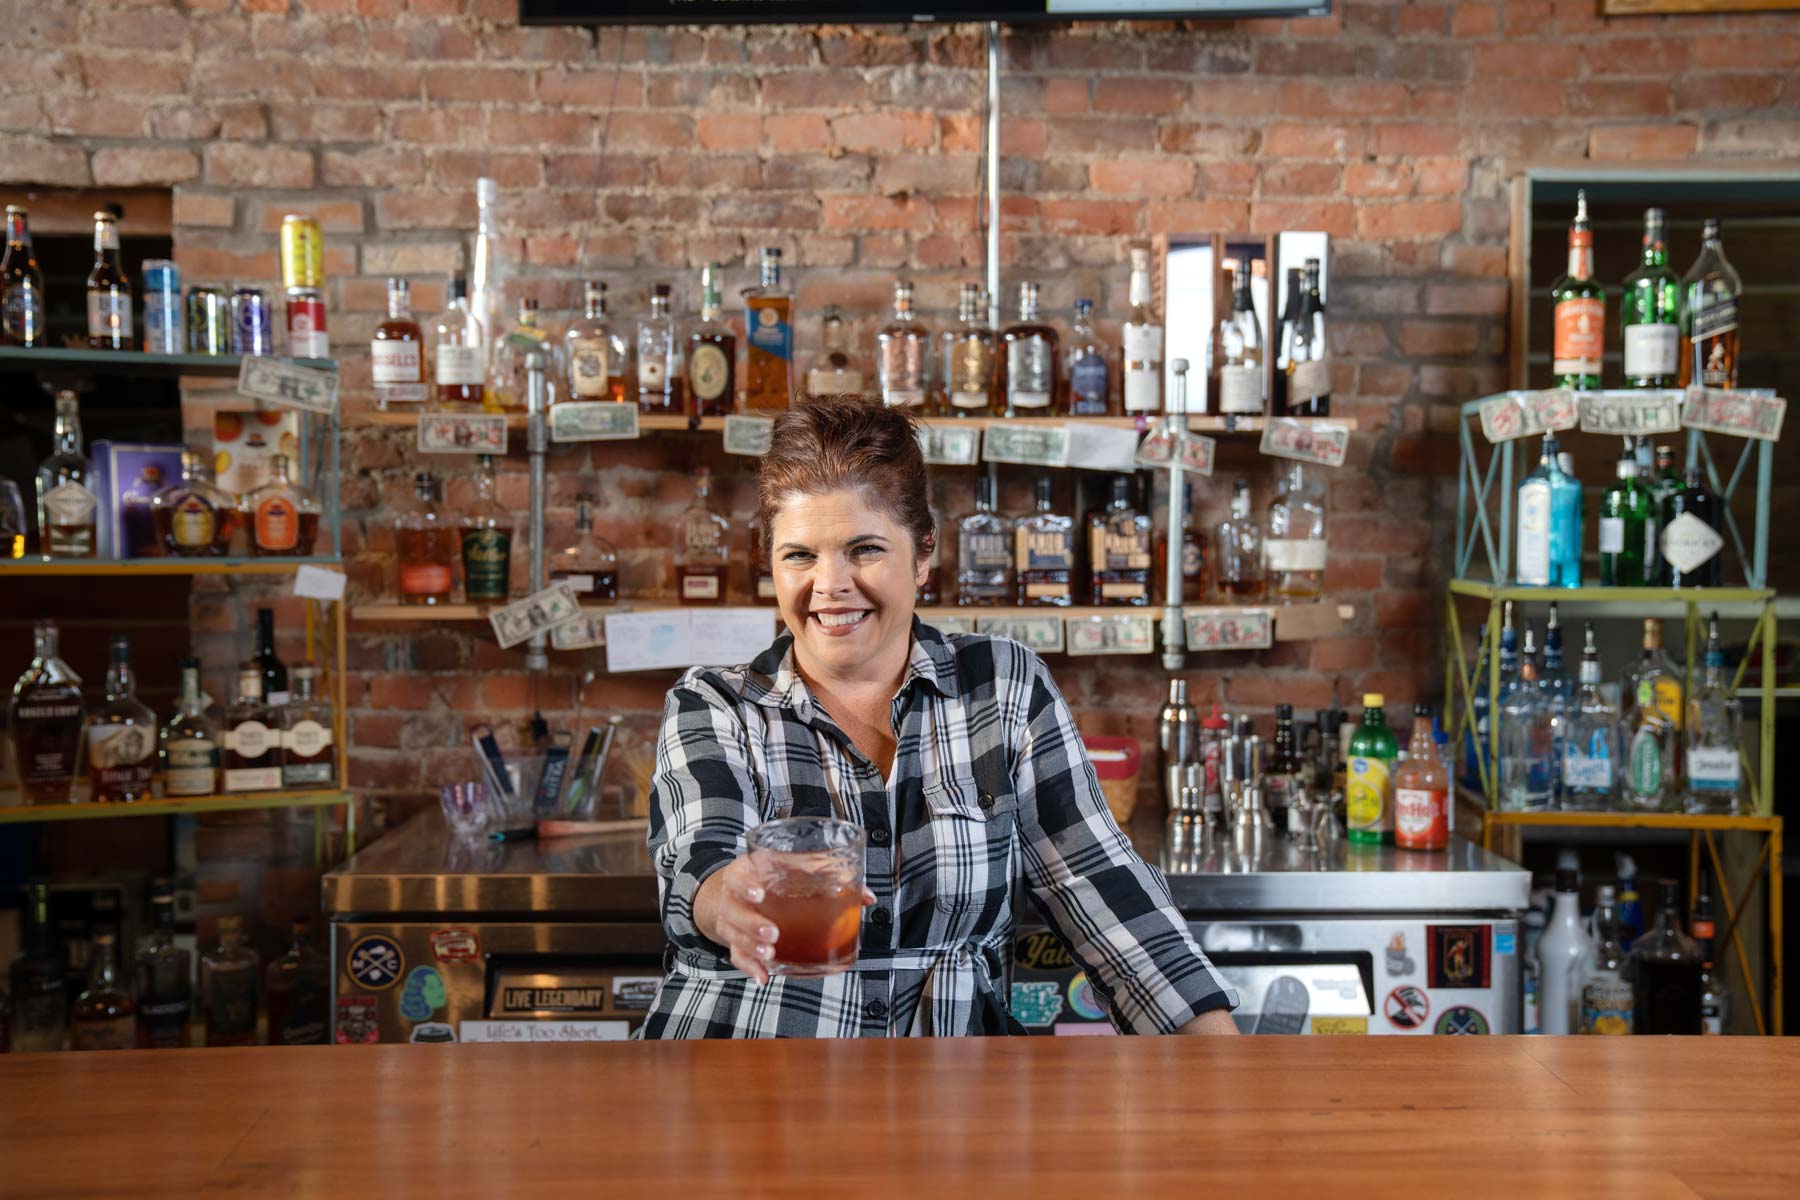 Female bartender behind a bar holding a glass of bourbon